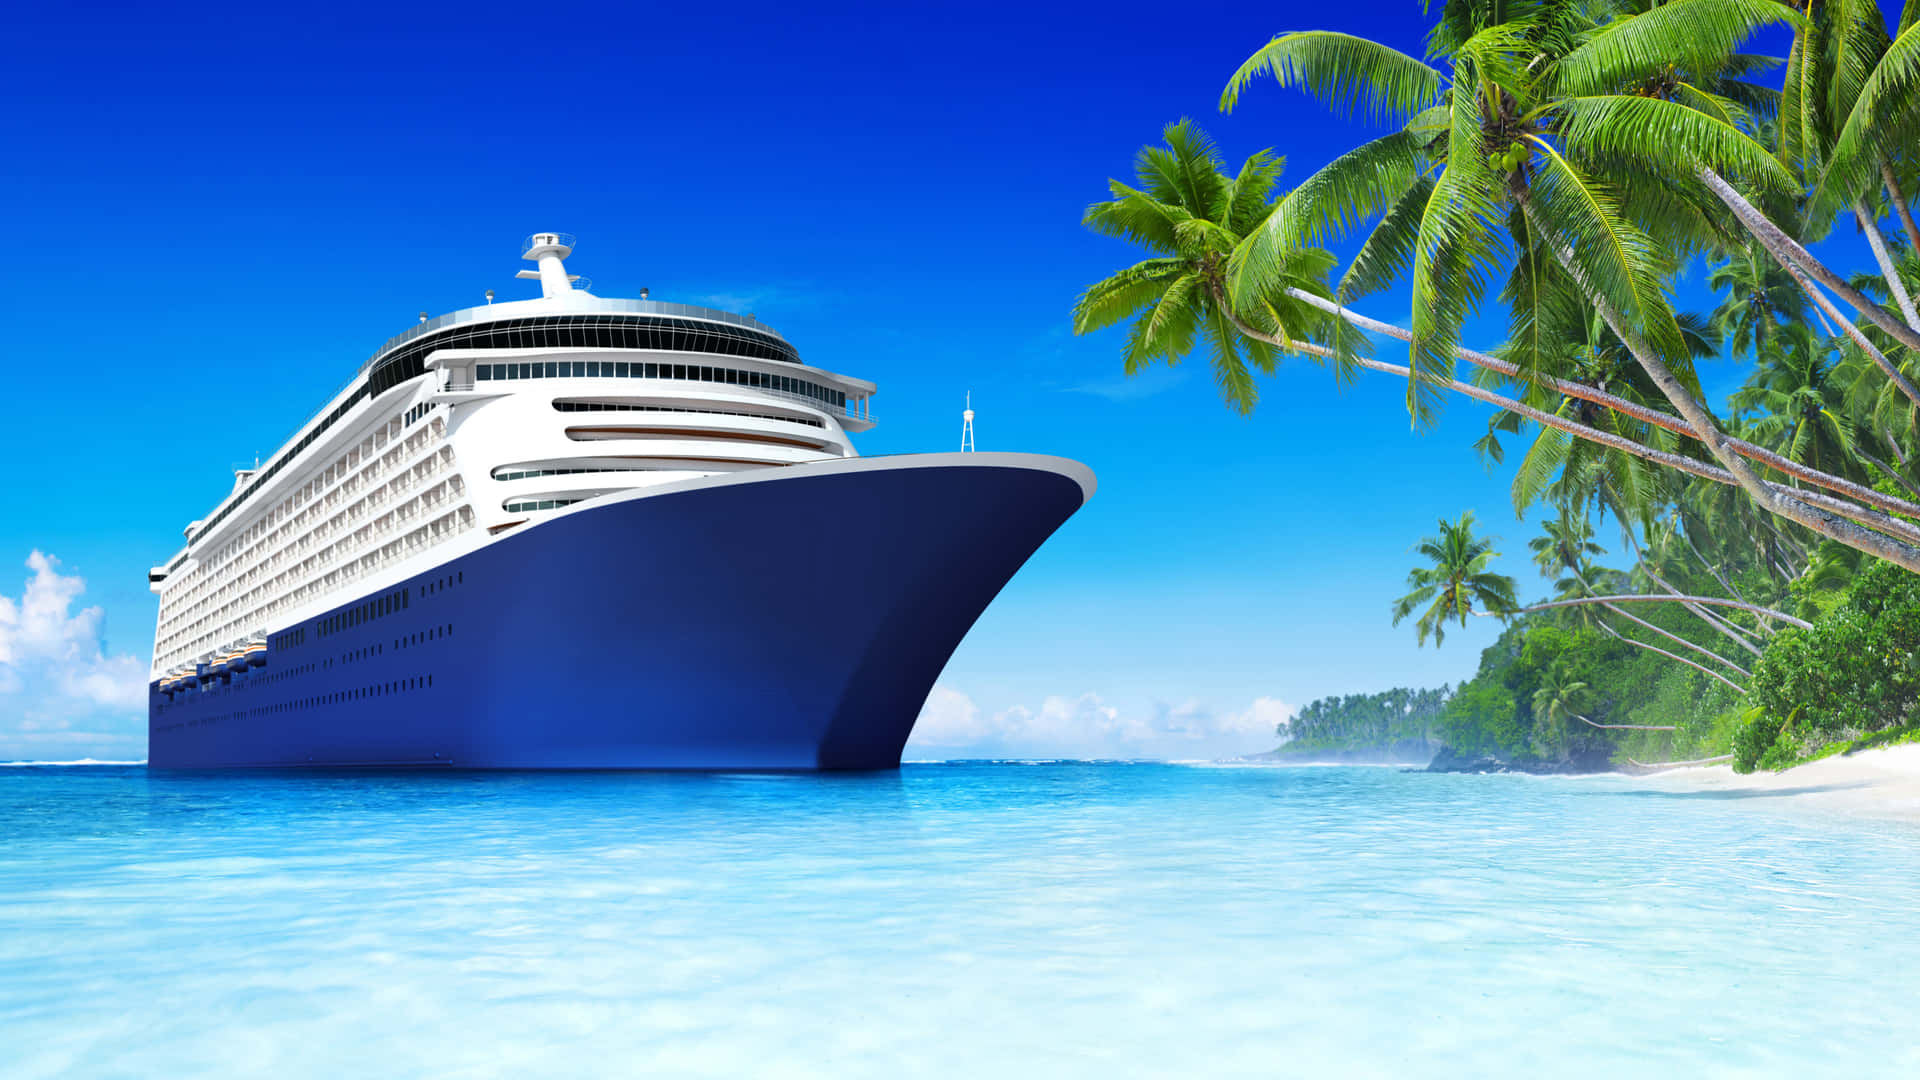 "Cruise away in a luxurious Ship"